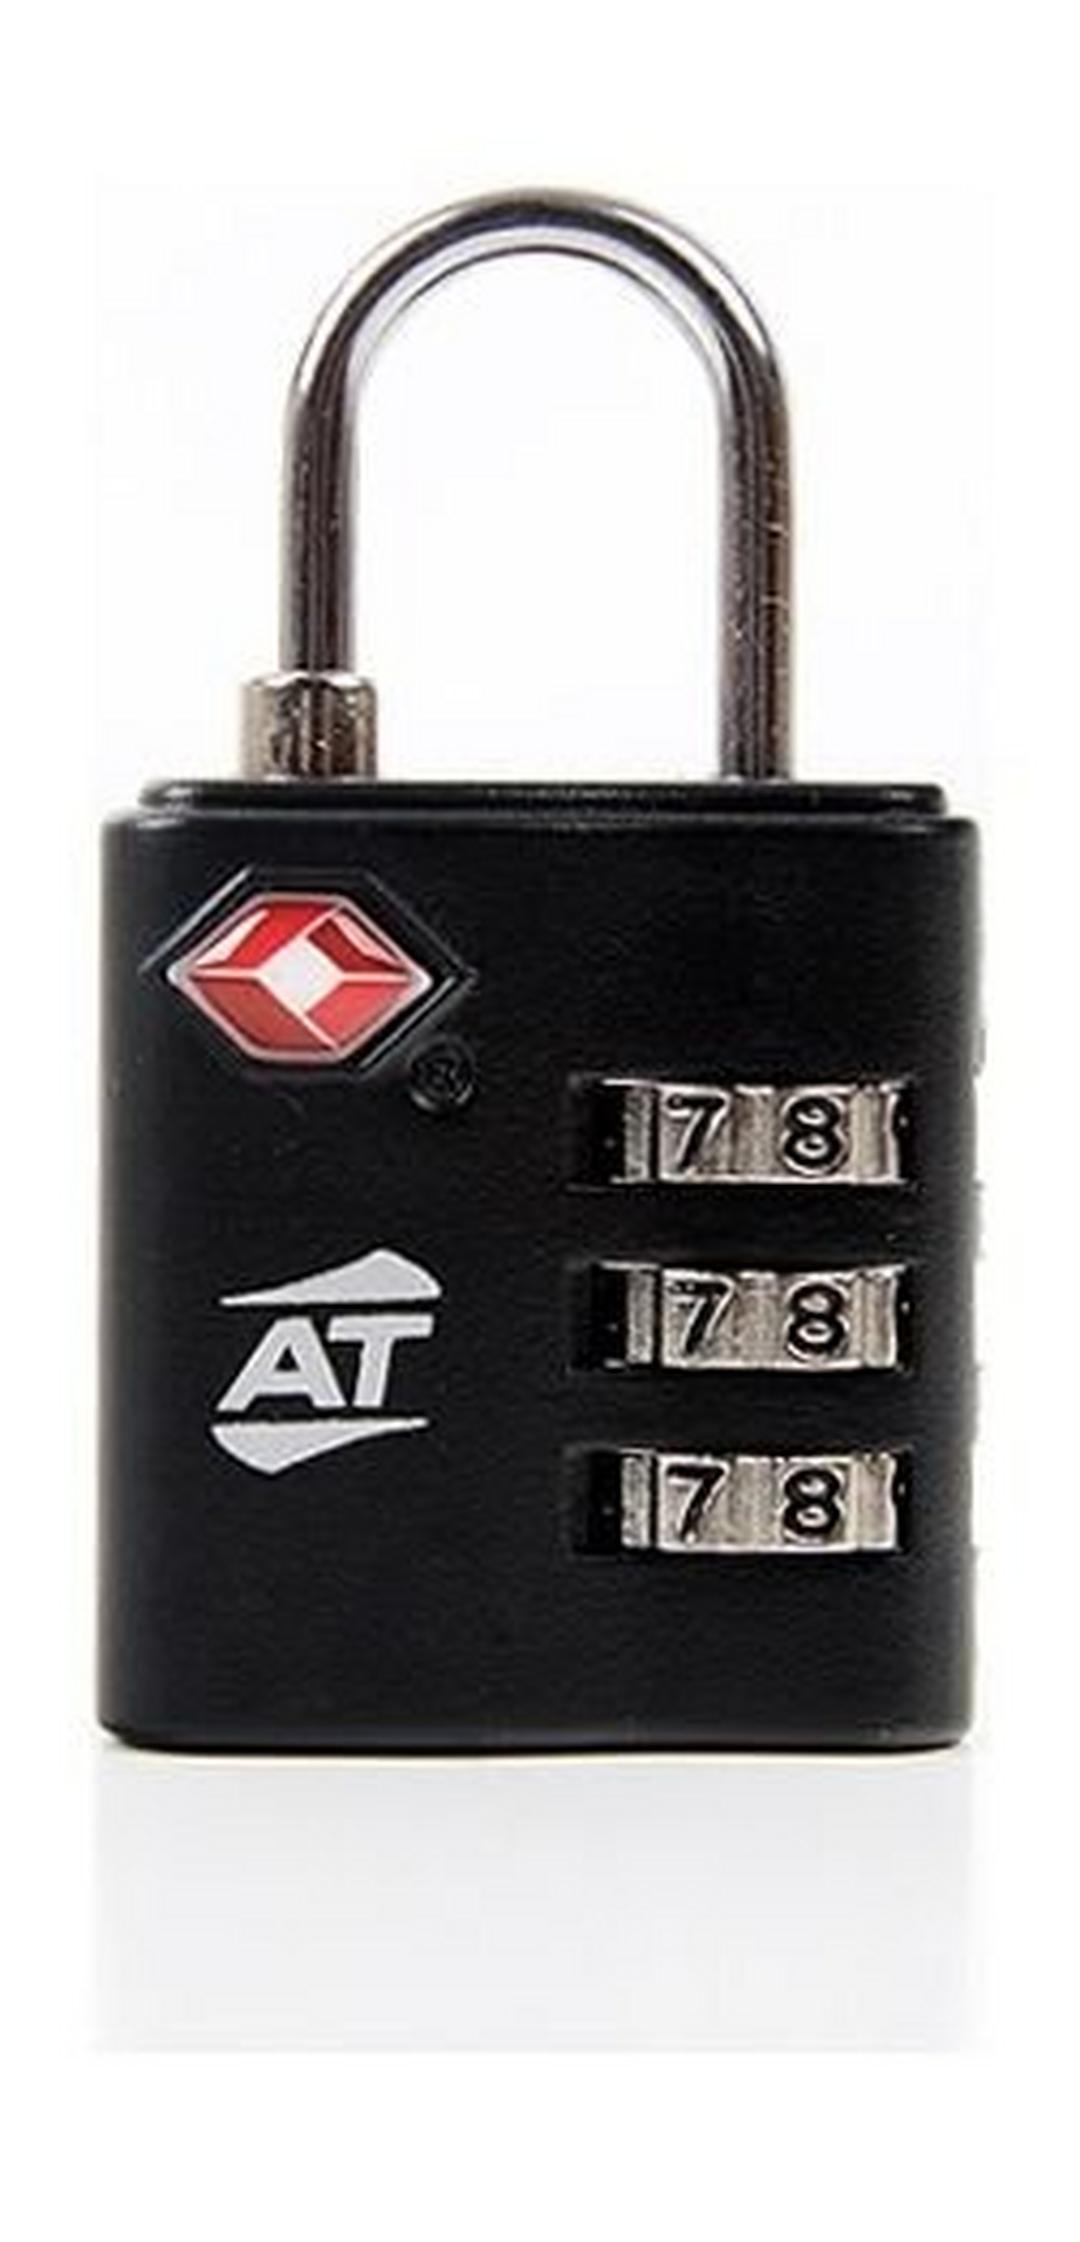 قفل حقيبة رقمي تي إس إيه من أميريكان توريستر - أسود